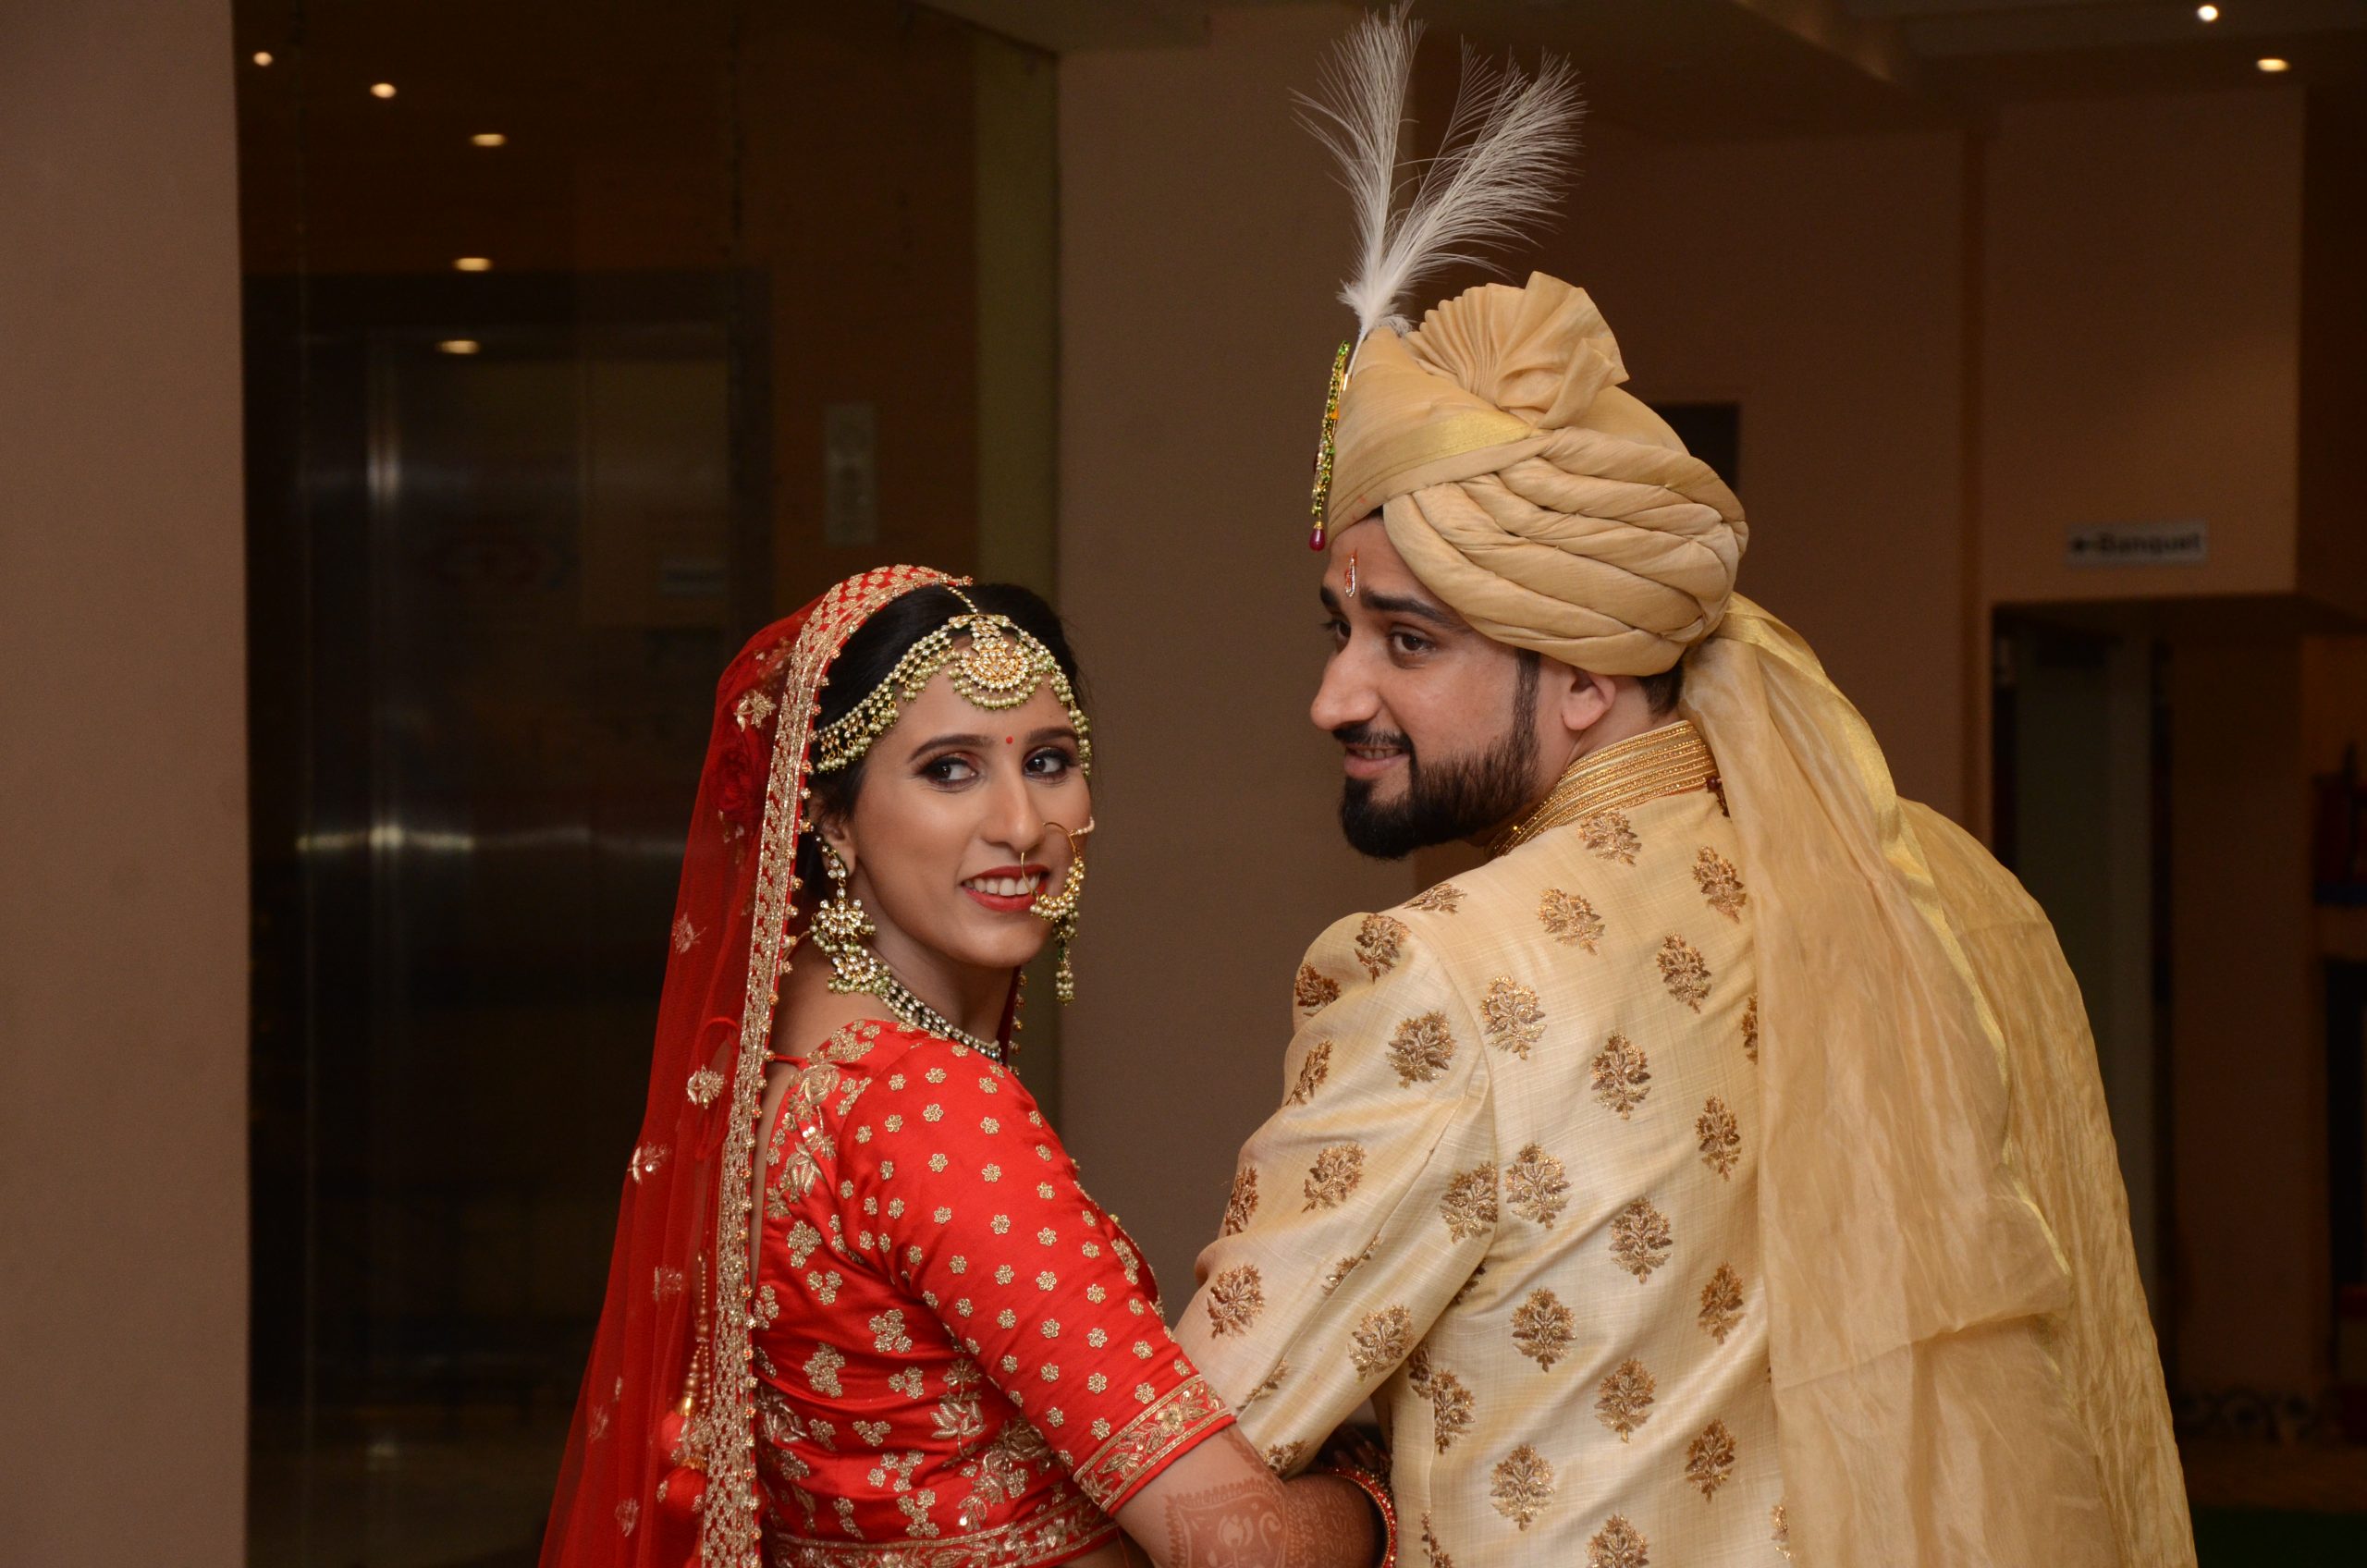 A happy Indian wedding couple